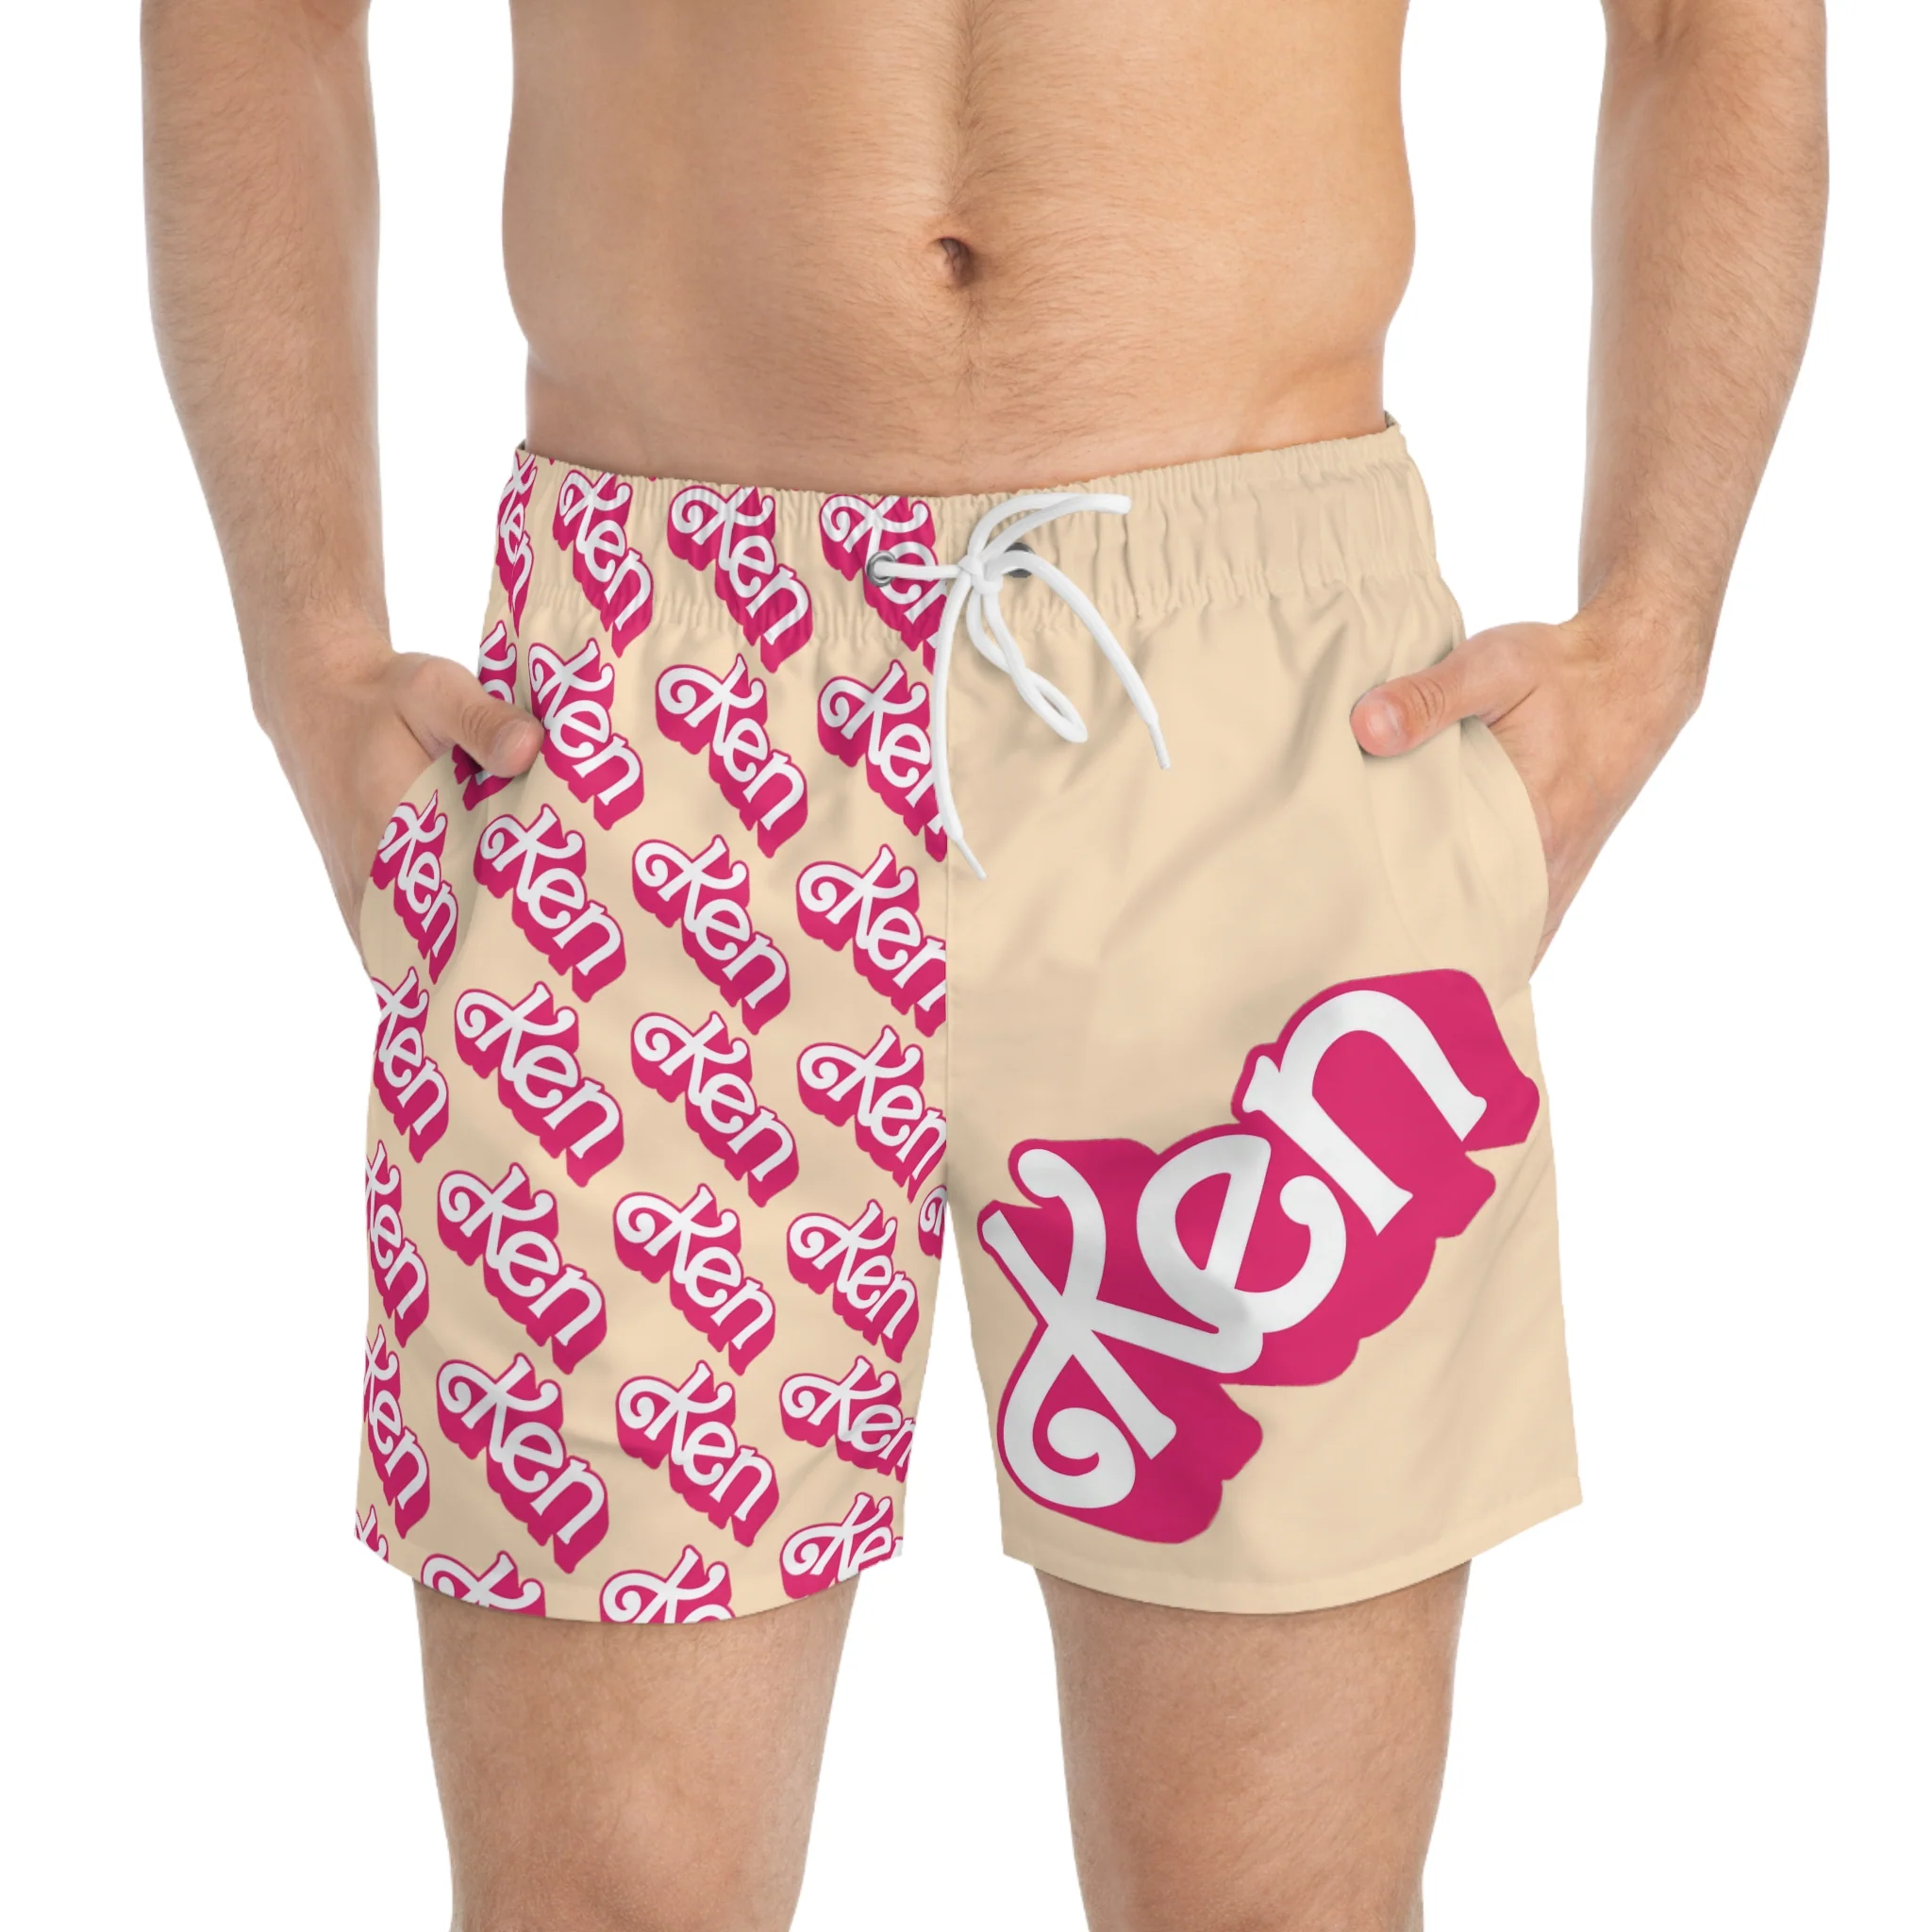 KEN Bisque Swim Trunks: The Perfect Summer Gift!"